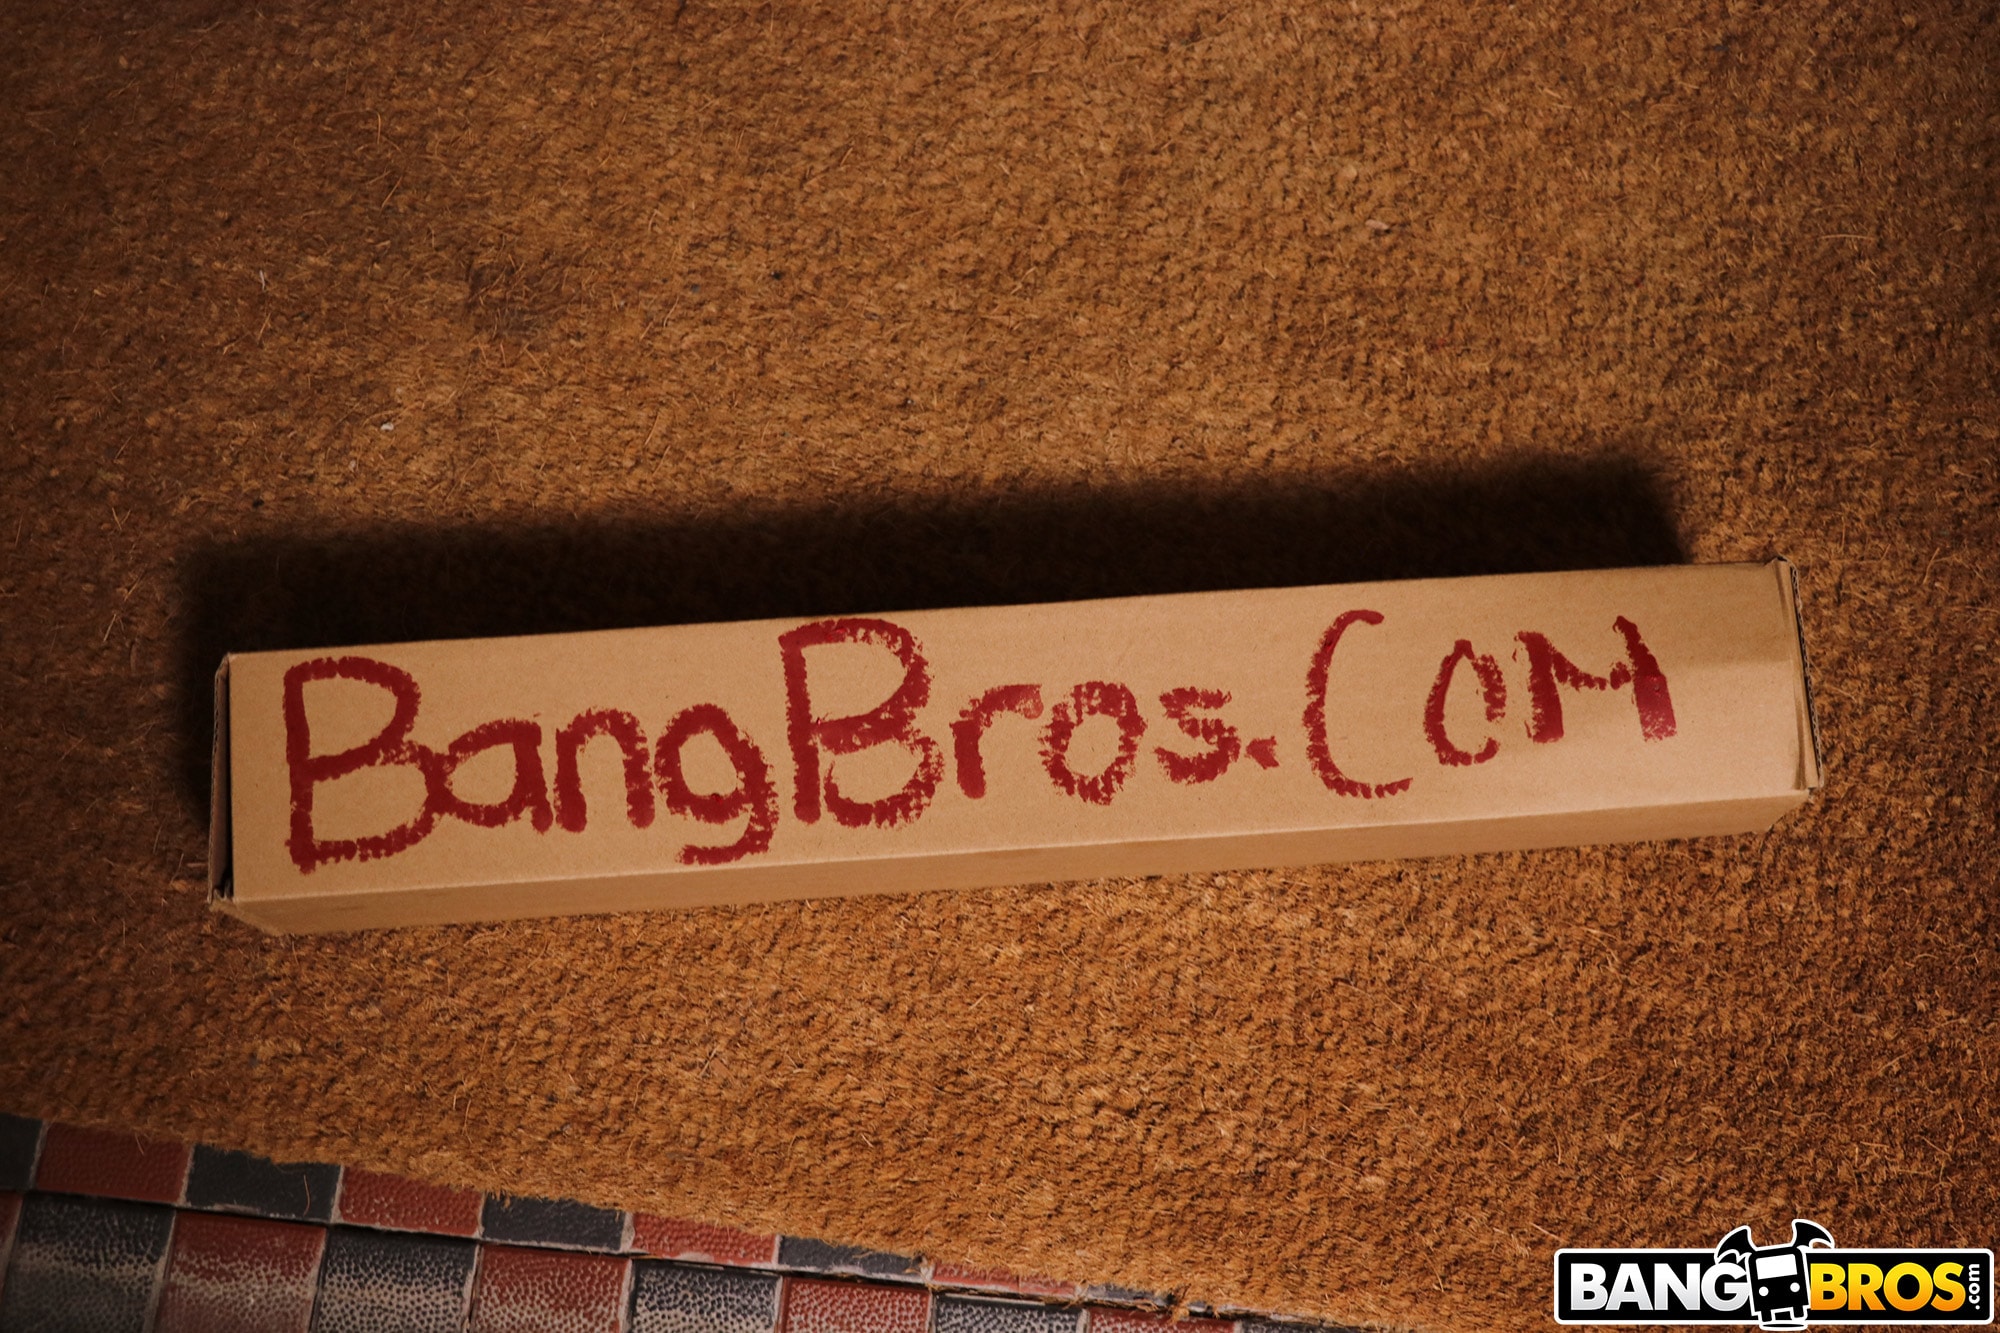 Bangbros 'Gets a Bangbros Delivery' starring Jennifer Mendez (Photo 112)